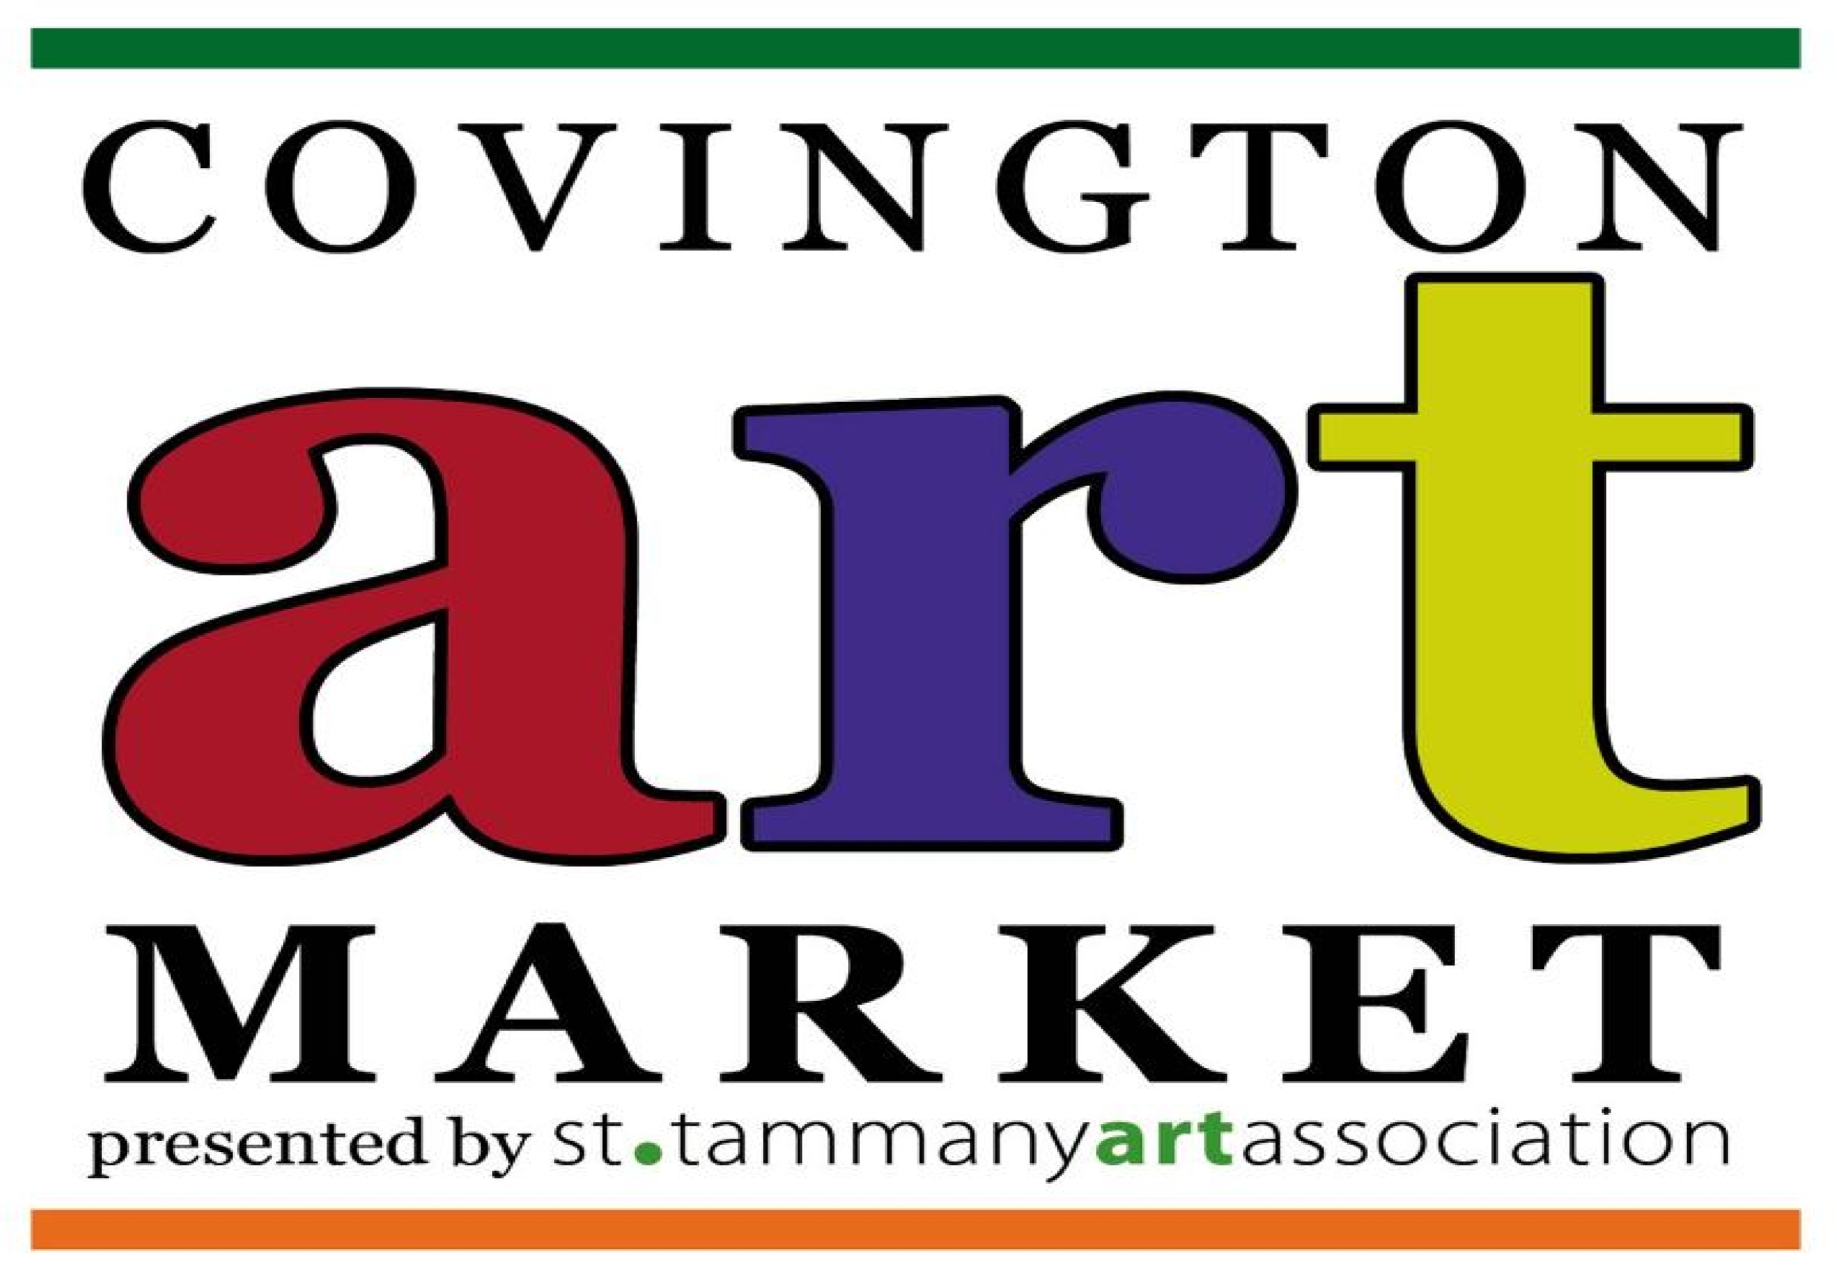 St. Tammany Art Association Covington Art Market 2012